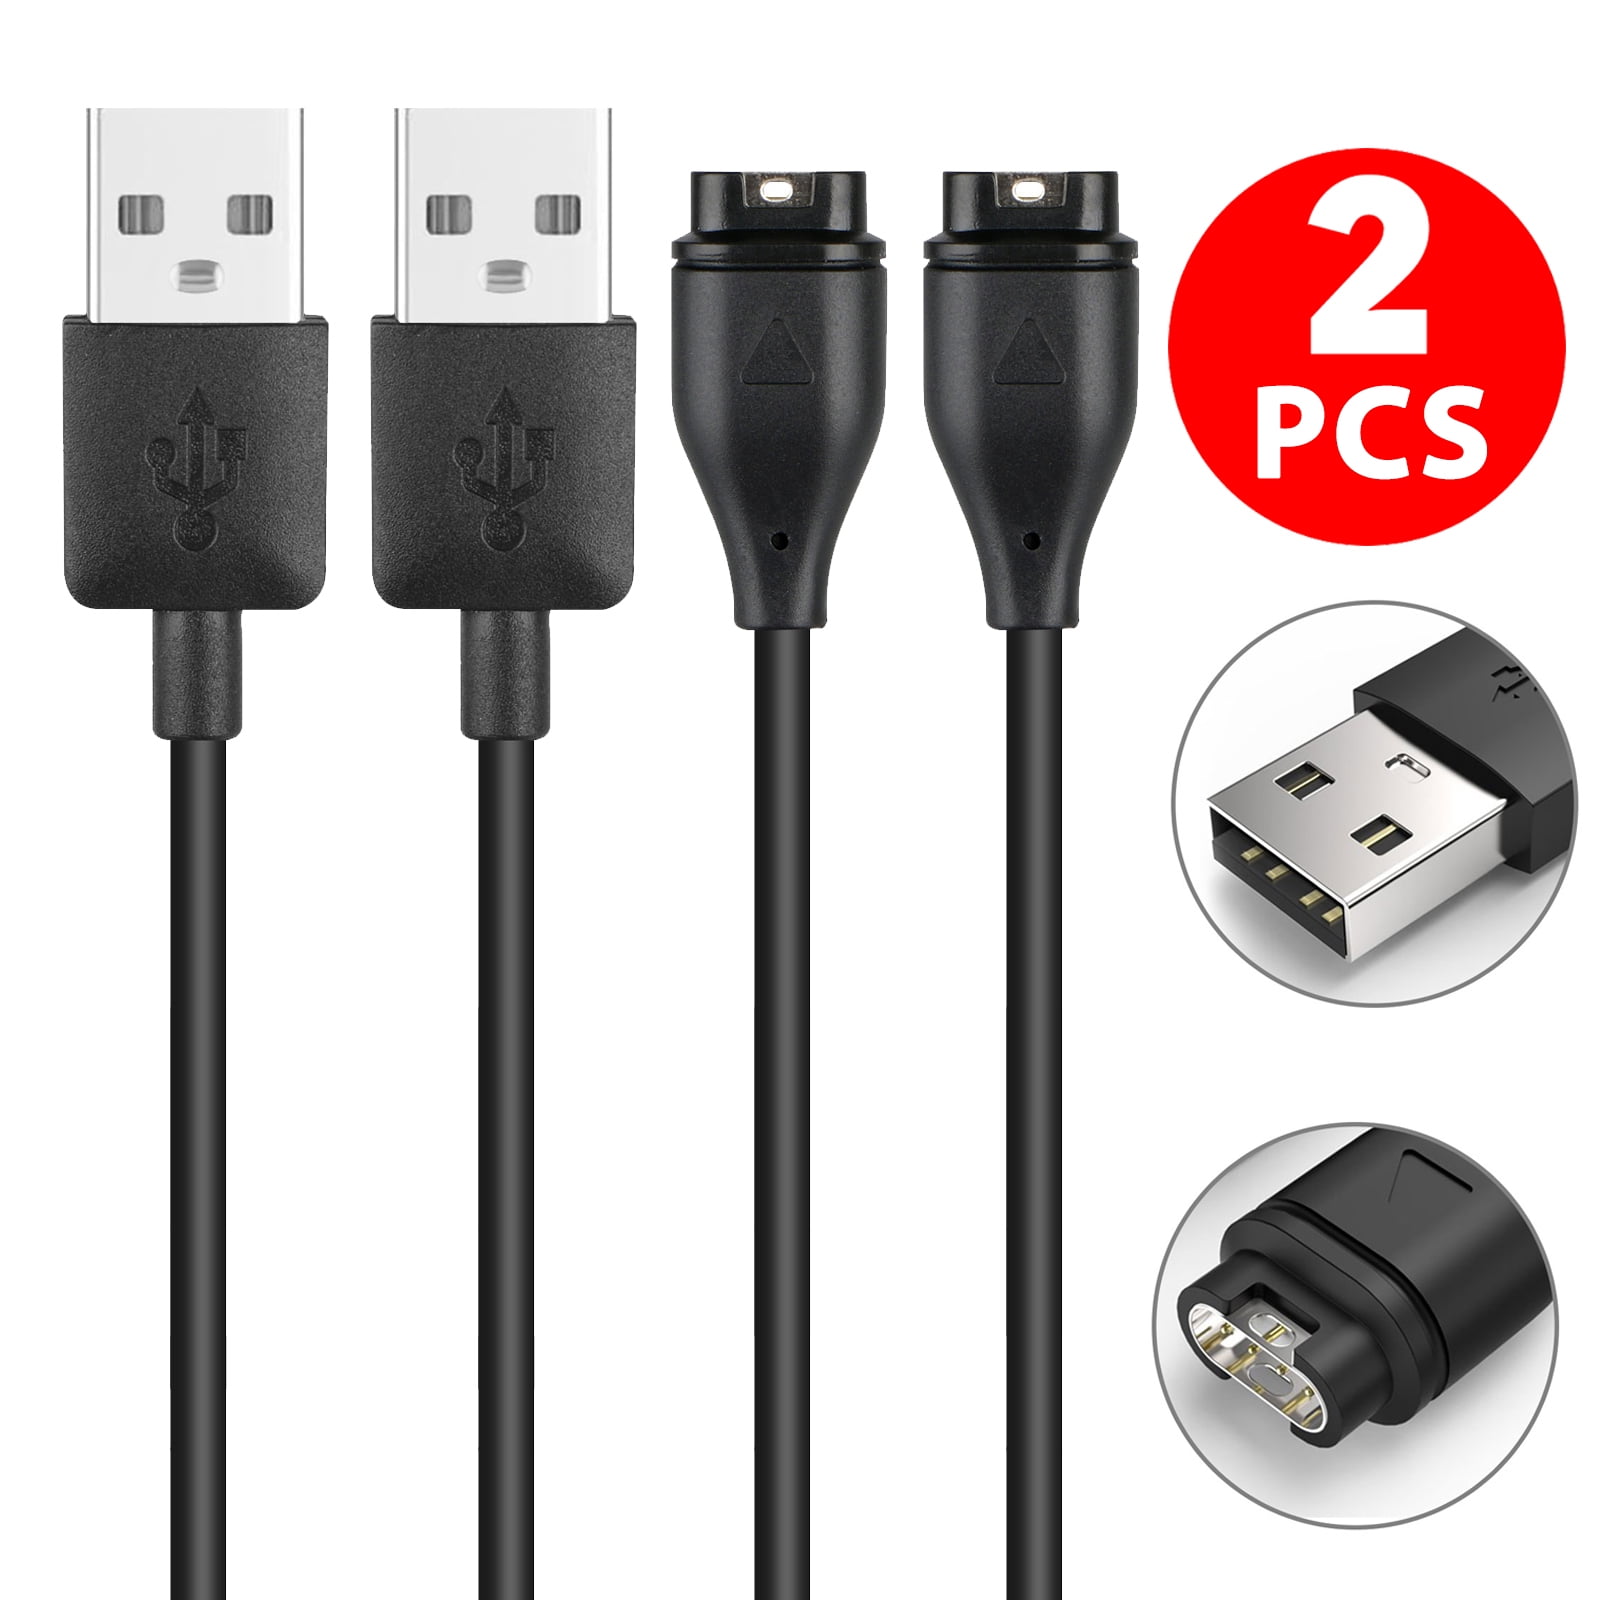 USB Charger Charging Cable Cord for Garmin Fenix 5 5S 5X Vivoactive 3 Vivosport 